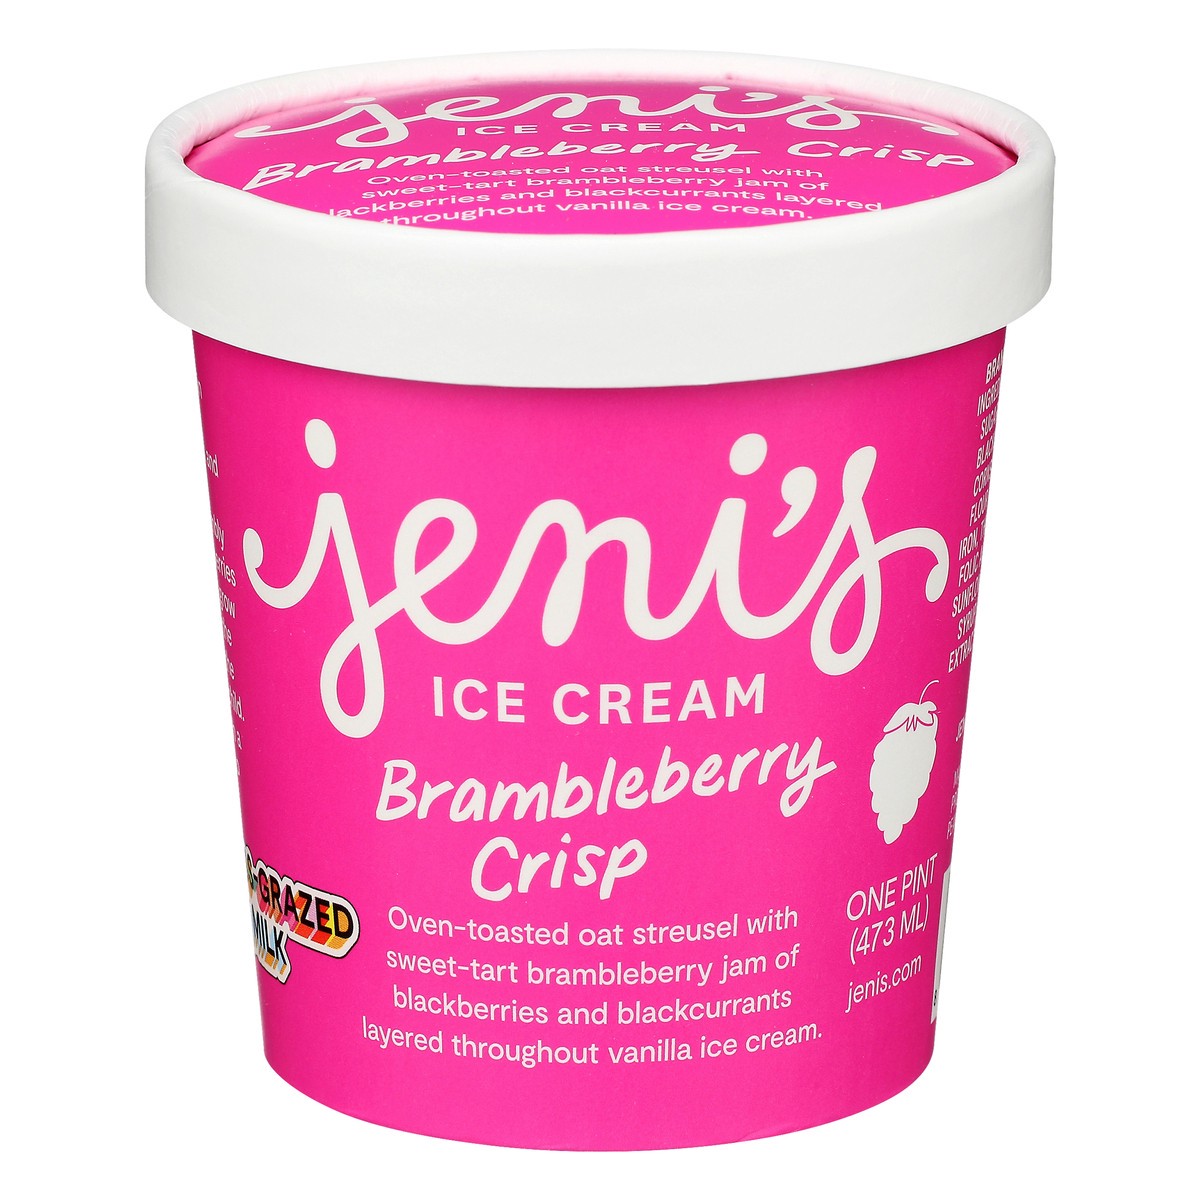 slide 1 of 68, Jeni's Brambleberry Crisp Ice Cream 1 pt, 1 pint